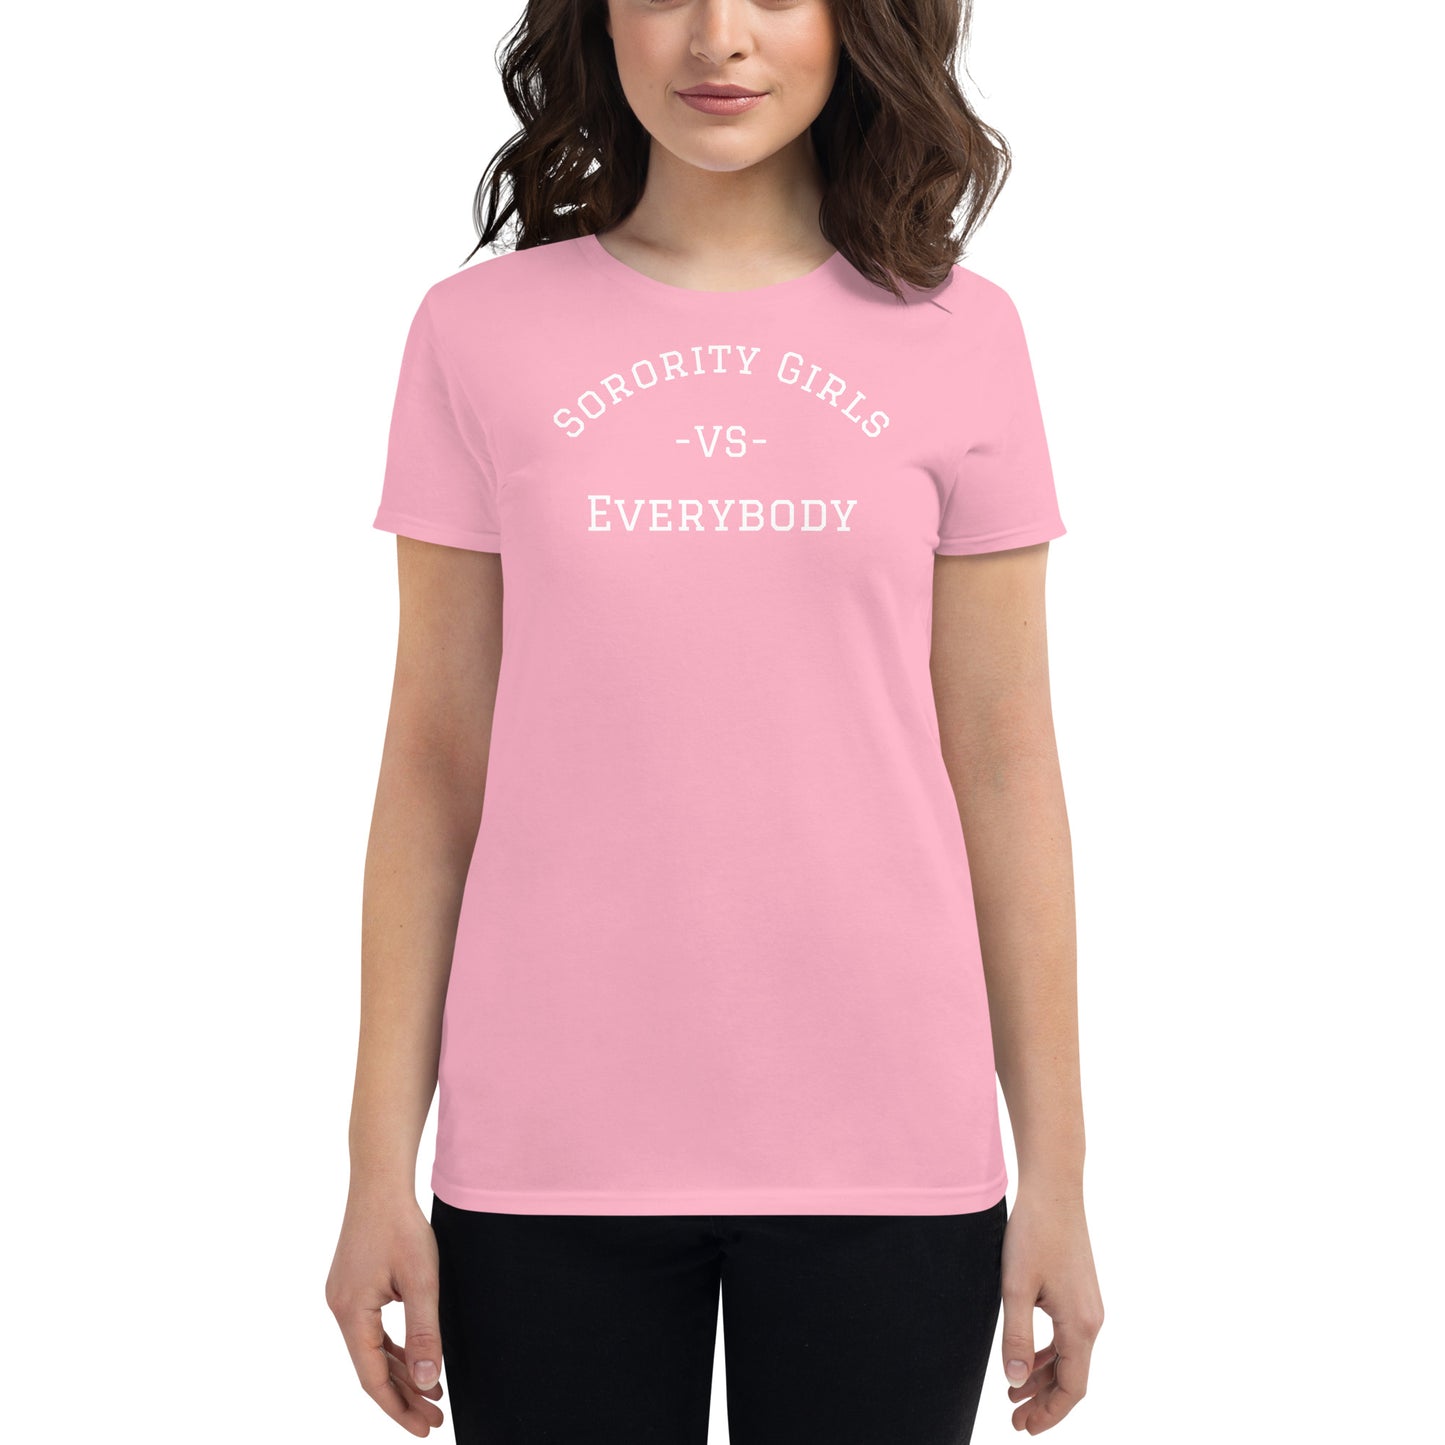 Women's pink tee says "Sorority Girls VS Everybody"